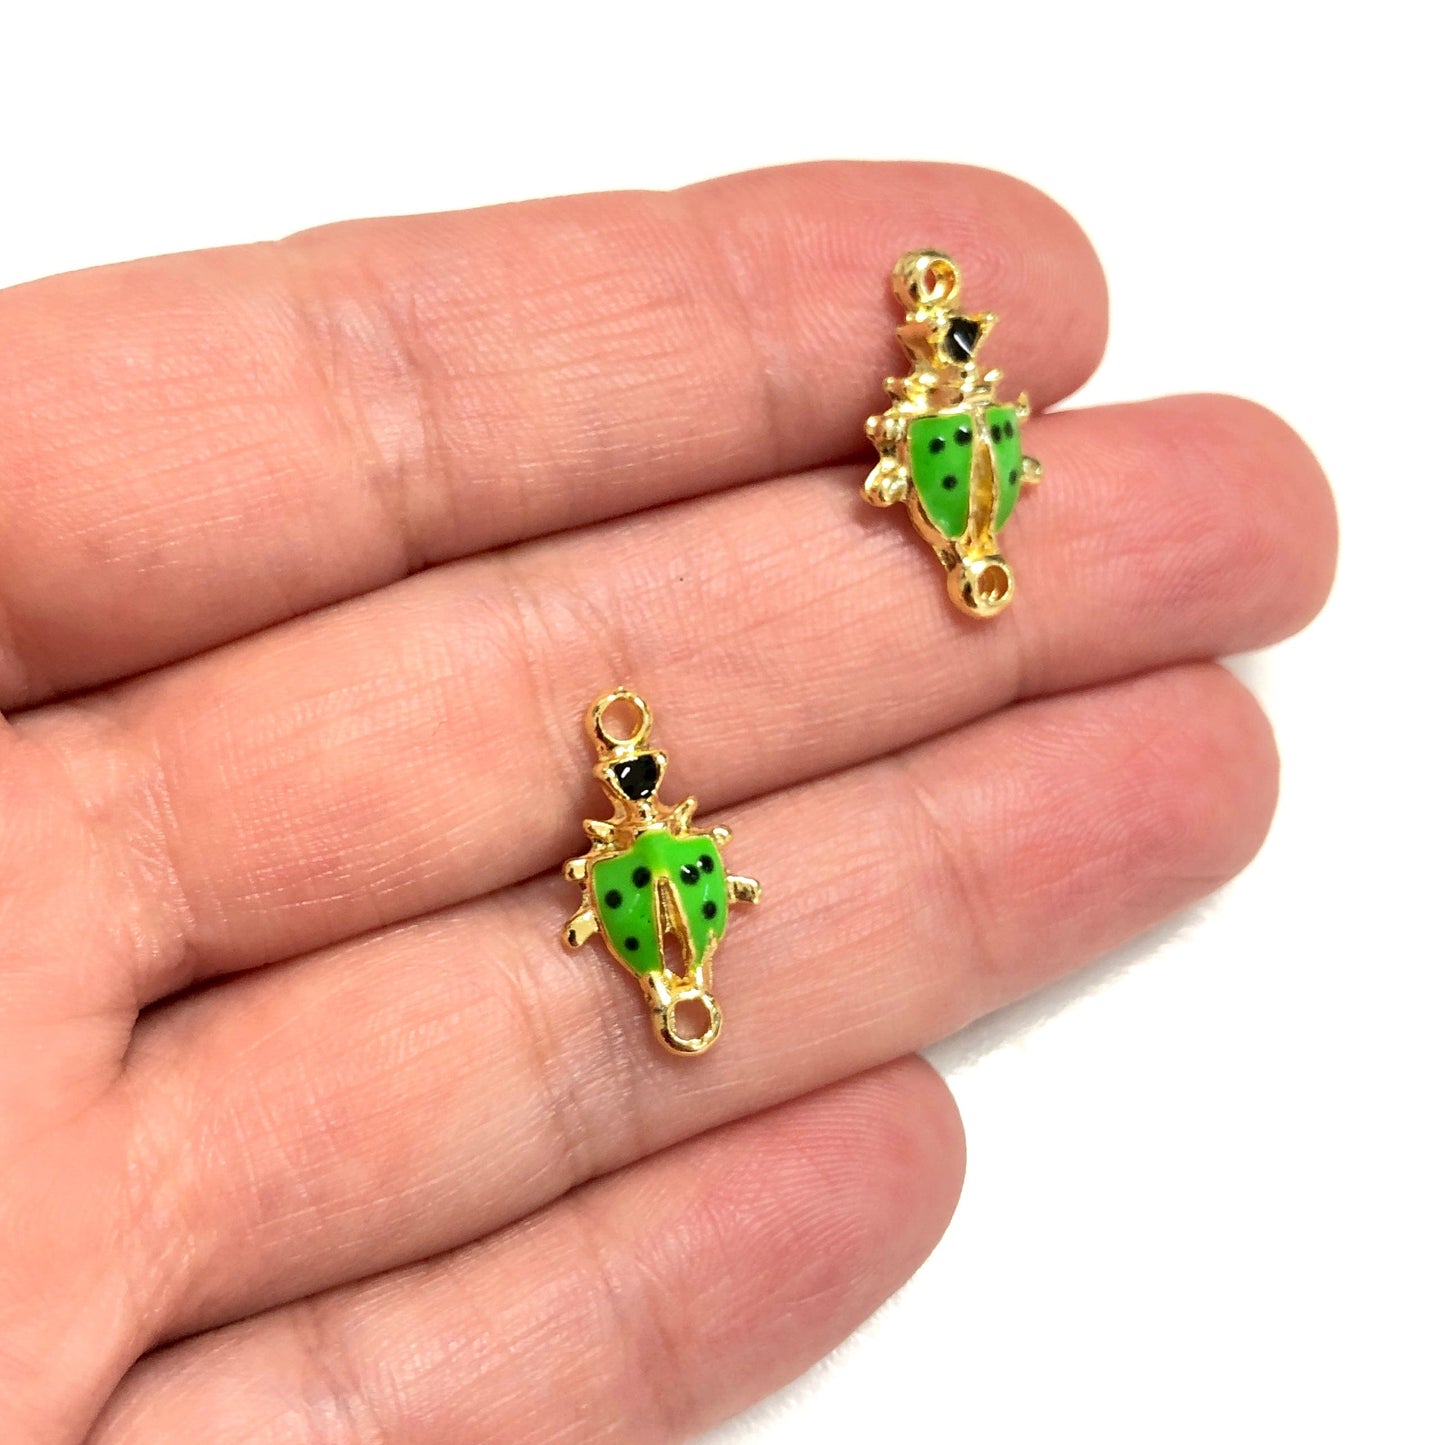 Gold Plated Enamel Ladybug Bracelet Attachment - Neon Green